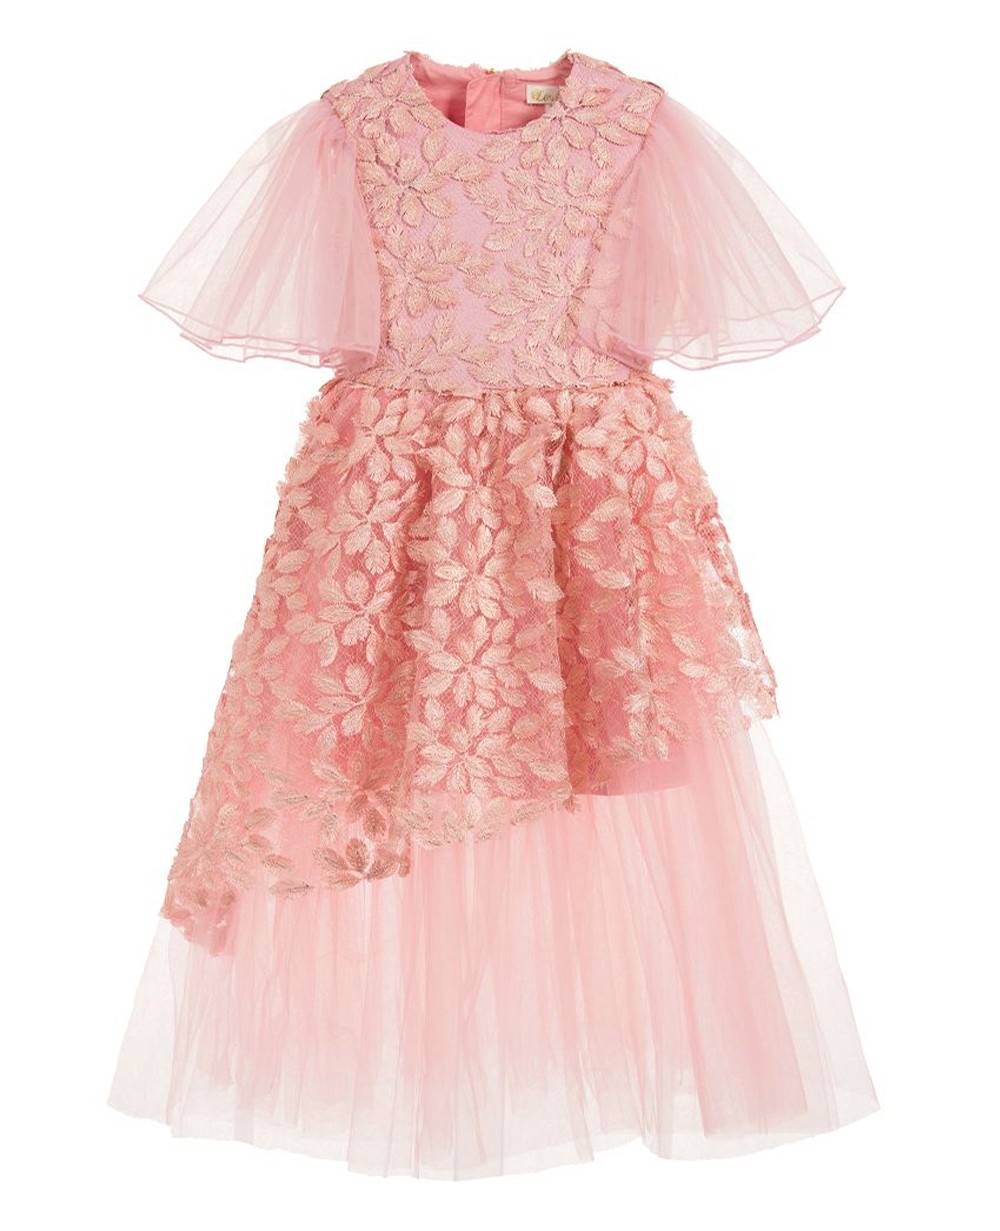 Pink Lace Tulle Dress Elegant Wedding Dress